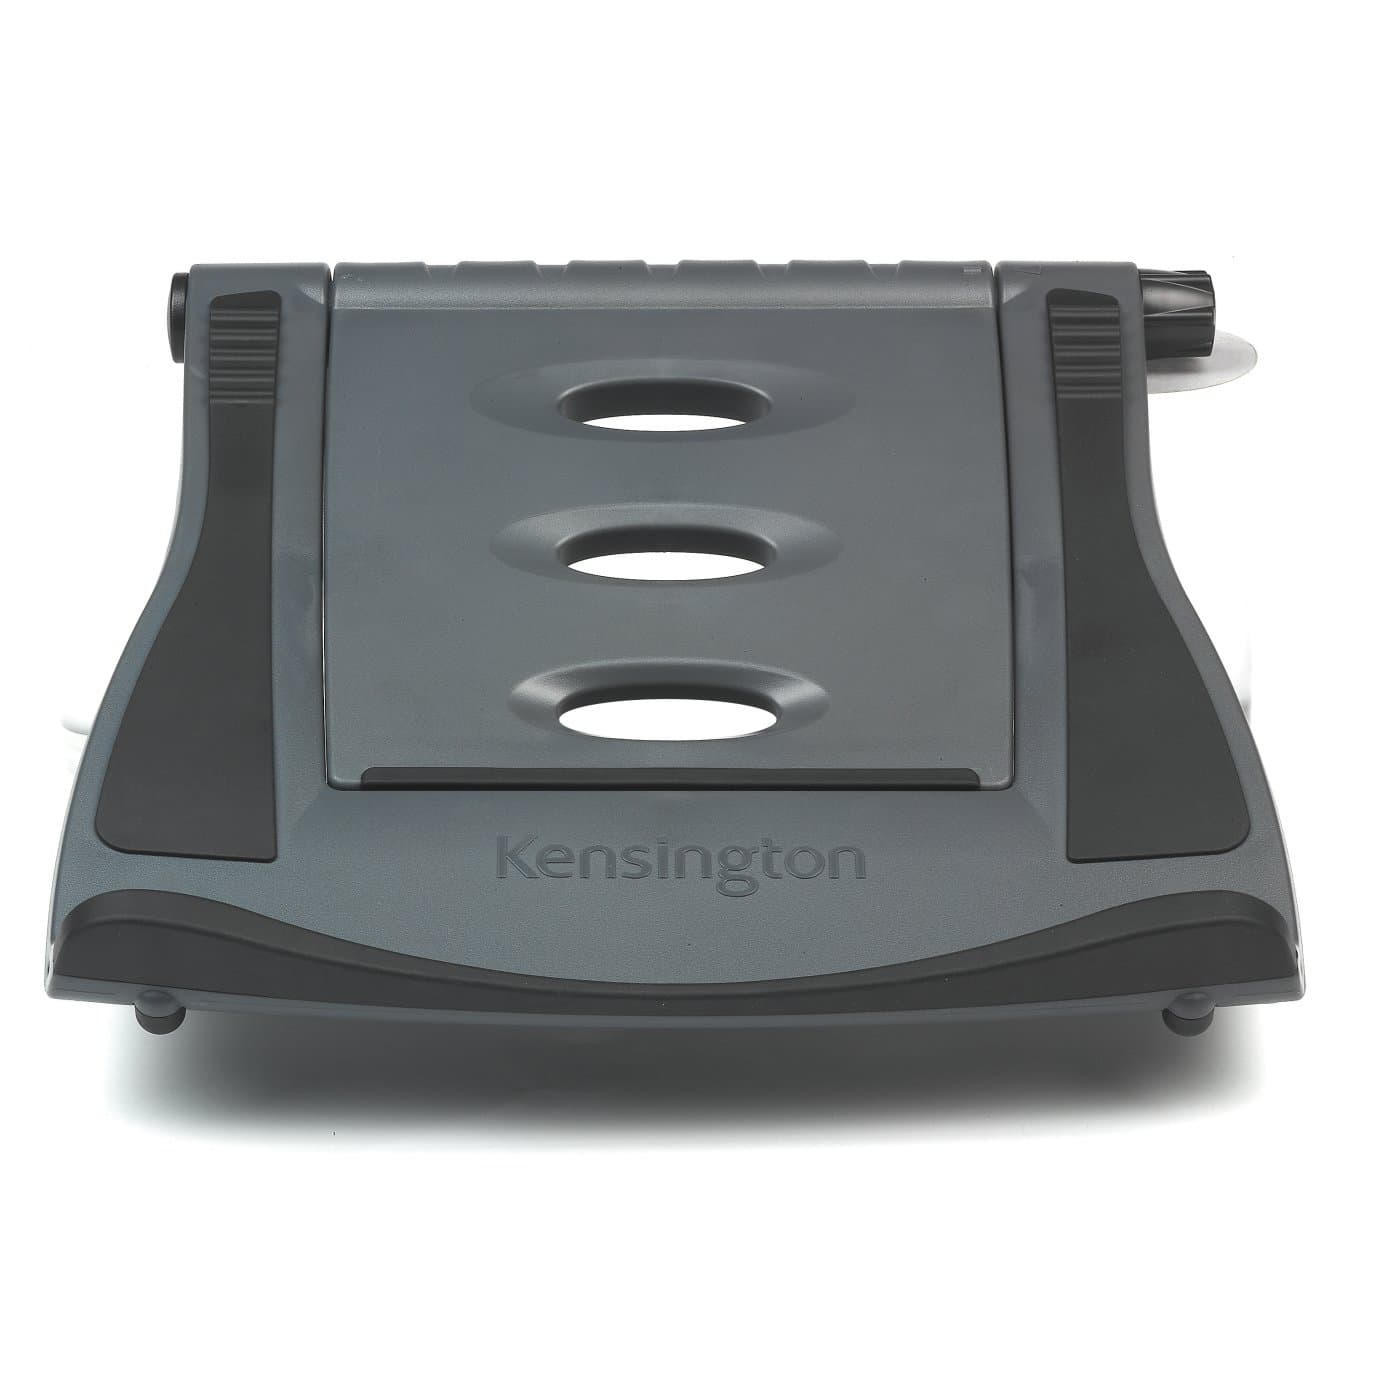 Kensington Easy Riser laptopstandaard